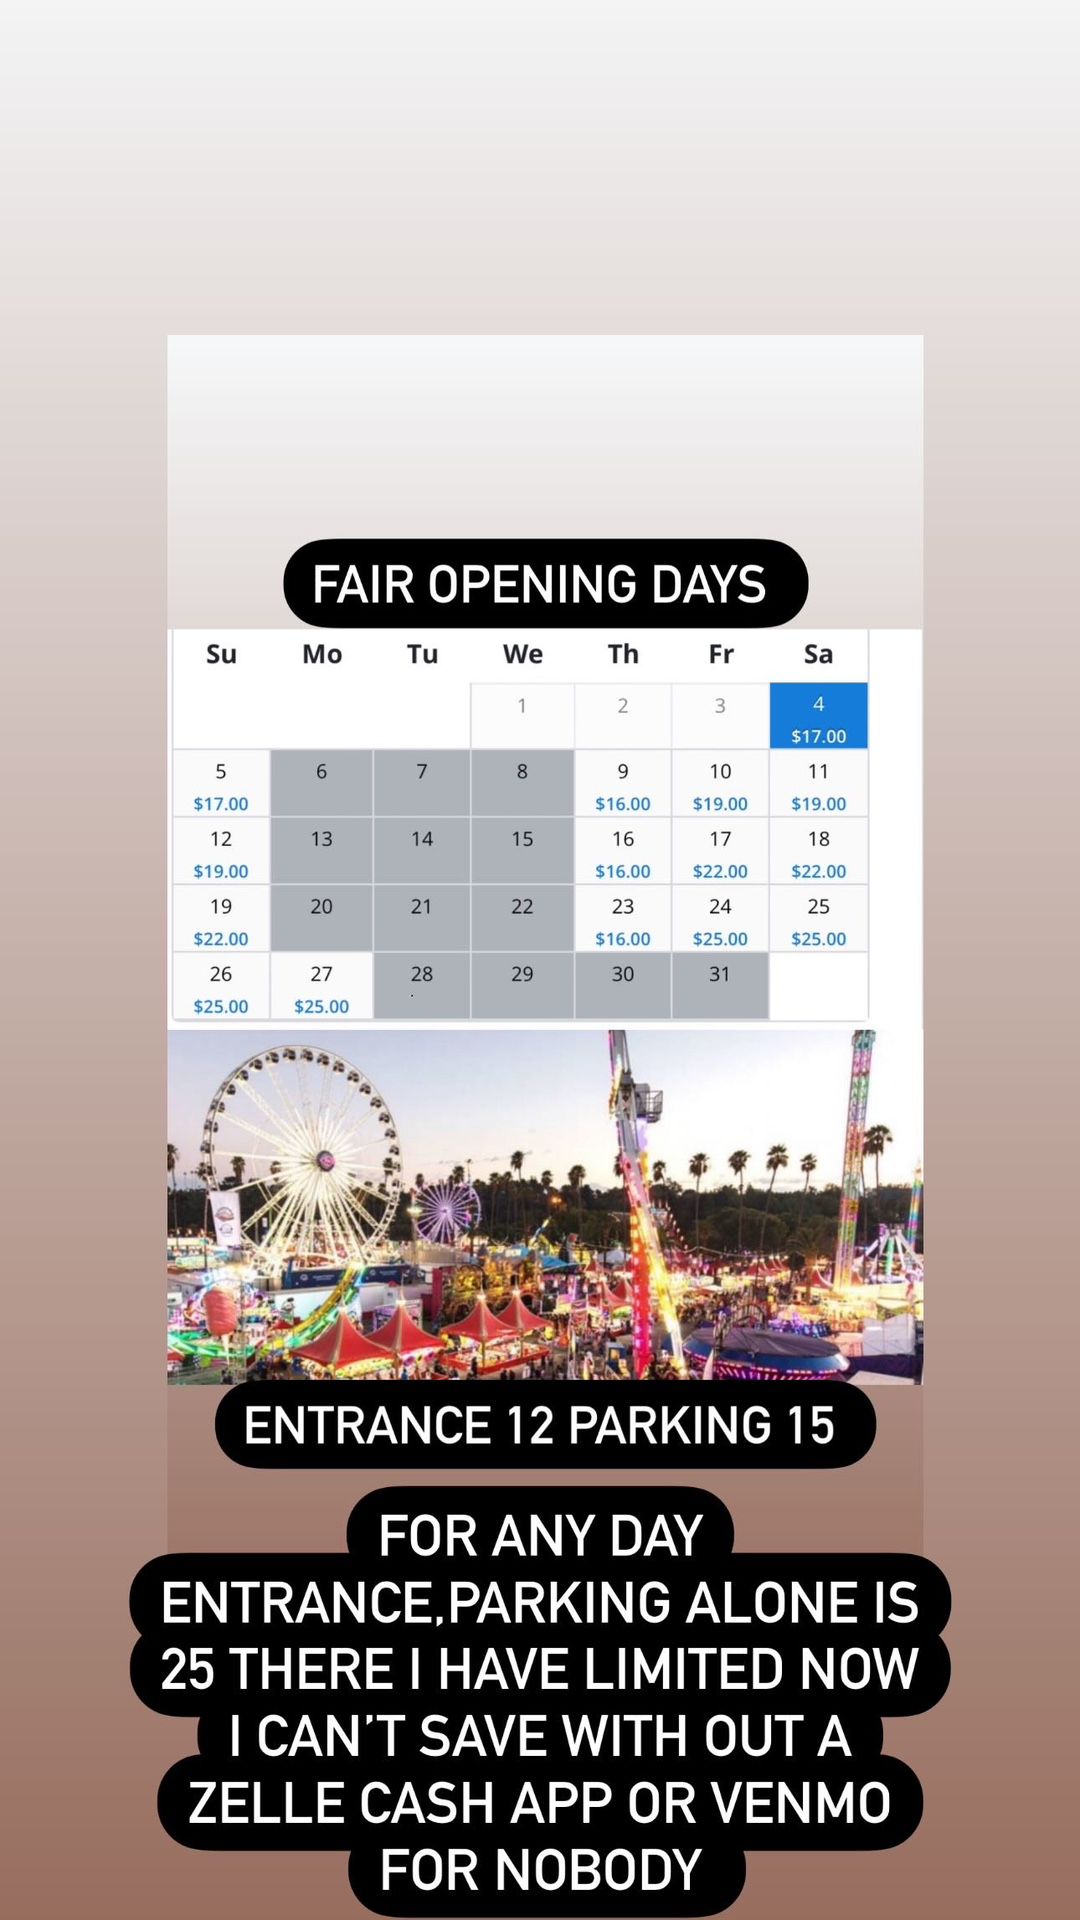 LA County Fair